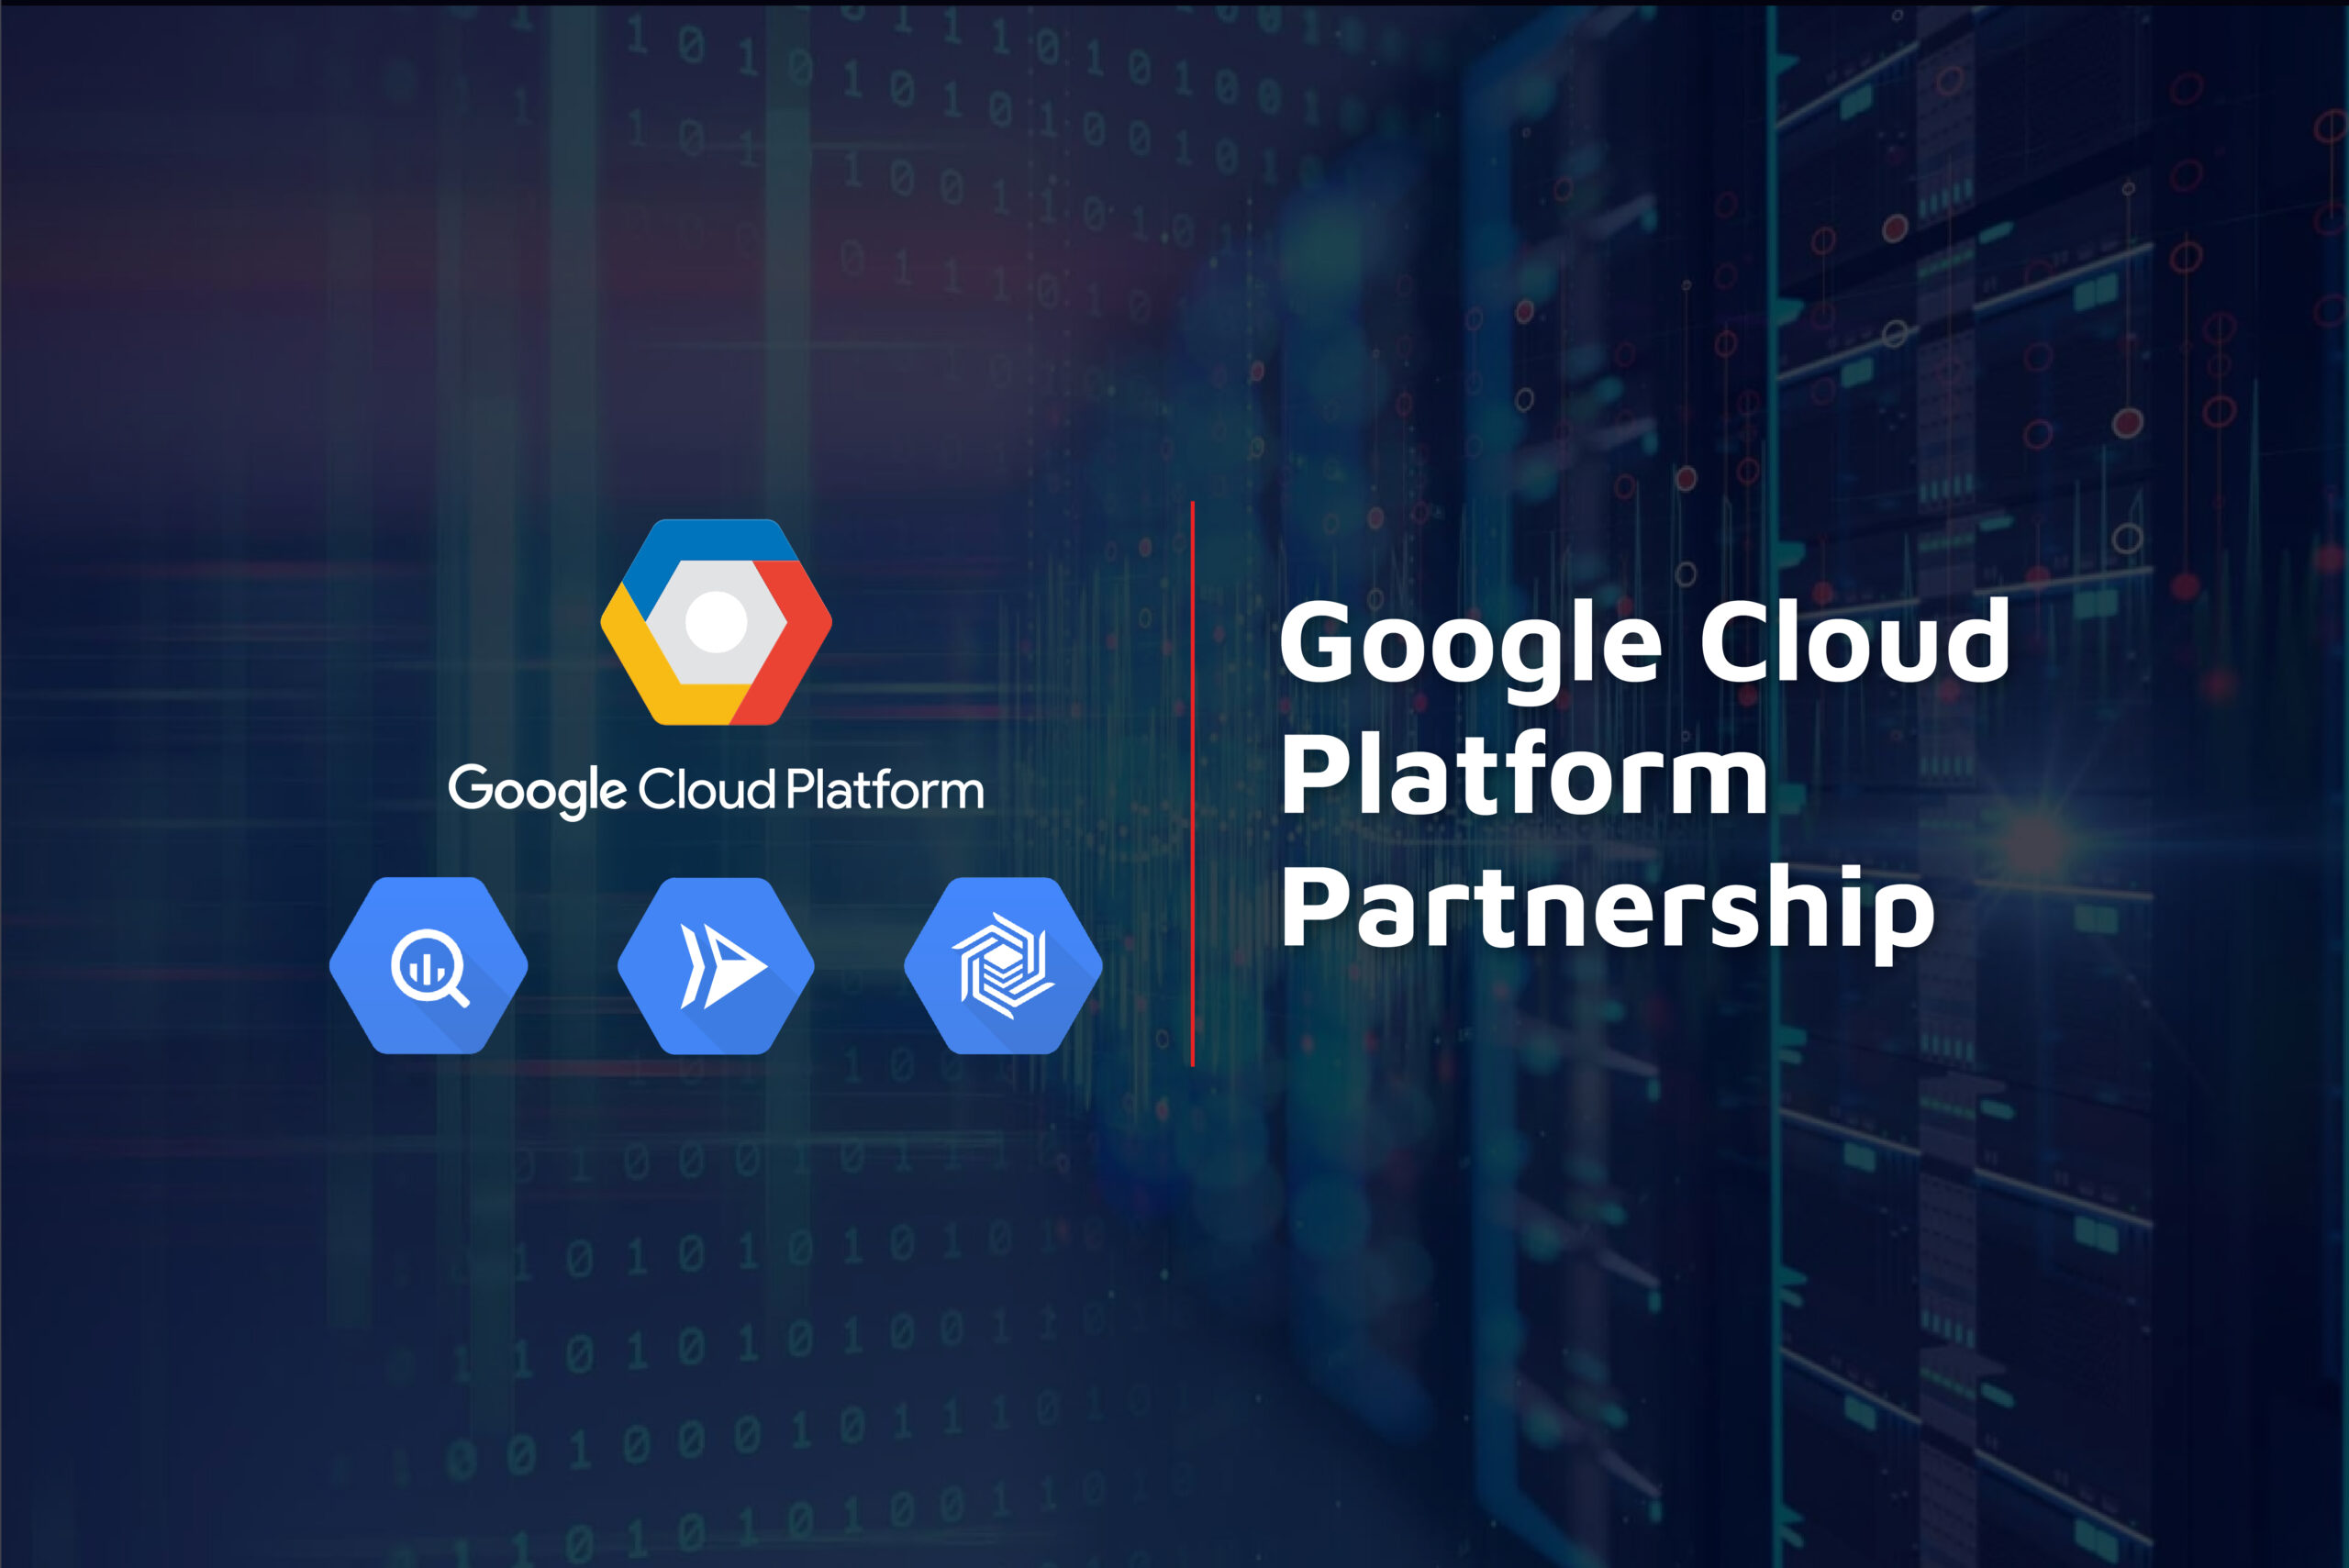 Google cloud platform partnership